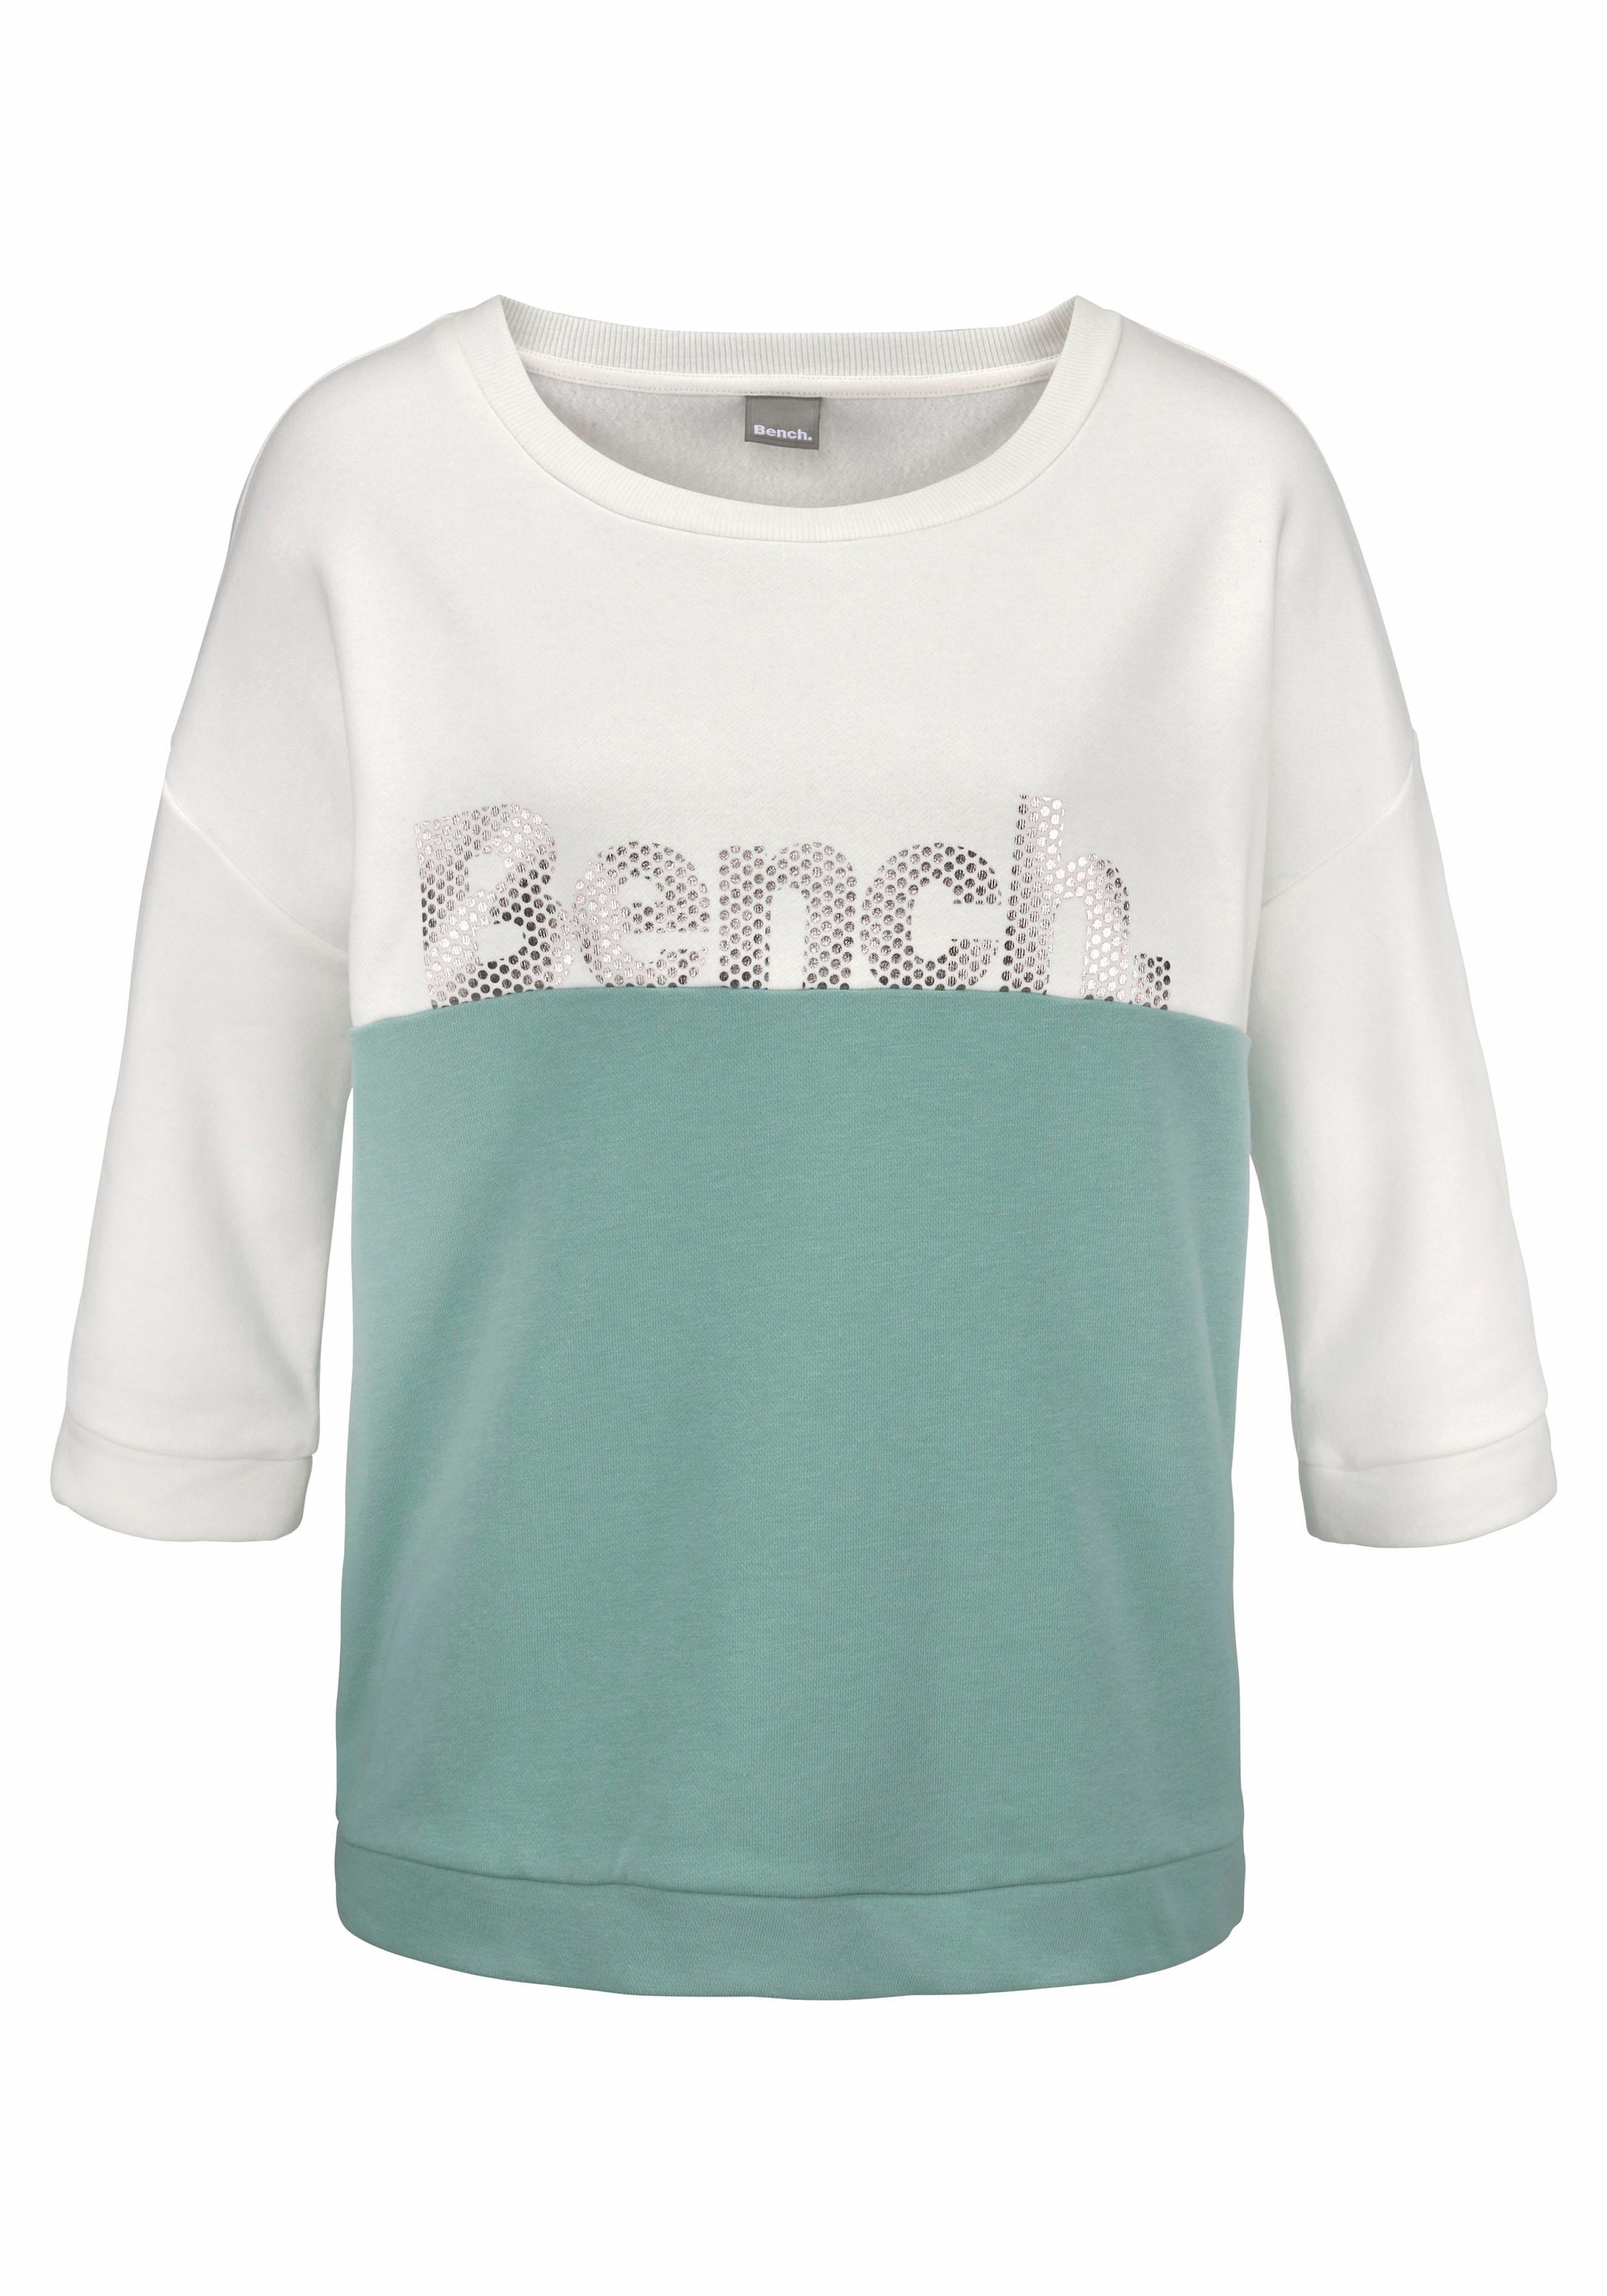 Bench. Sweatshirt, im Colorblocking Design, Loungewear, Loungeanzug shoppen | Sweatshirts